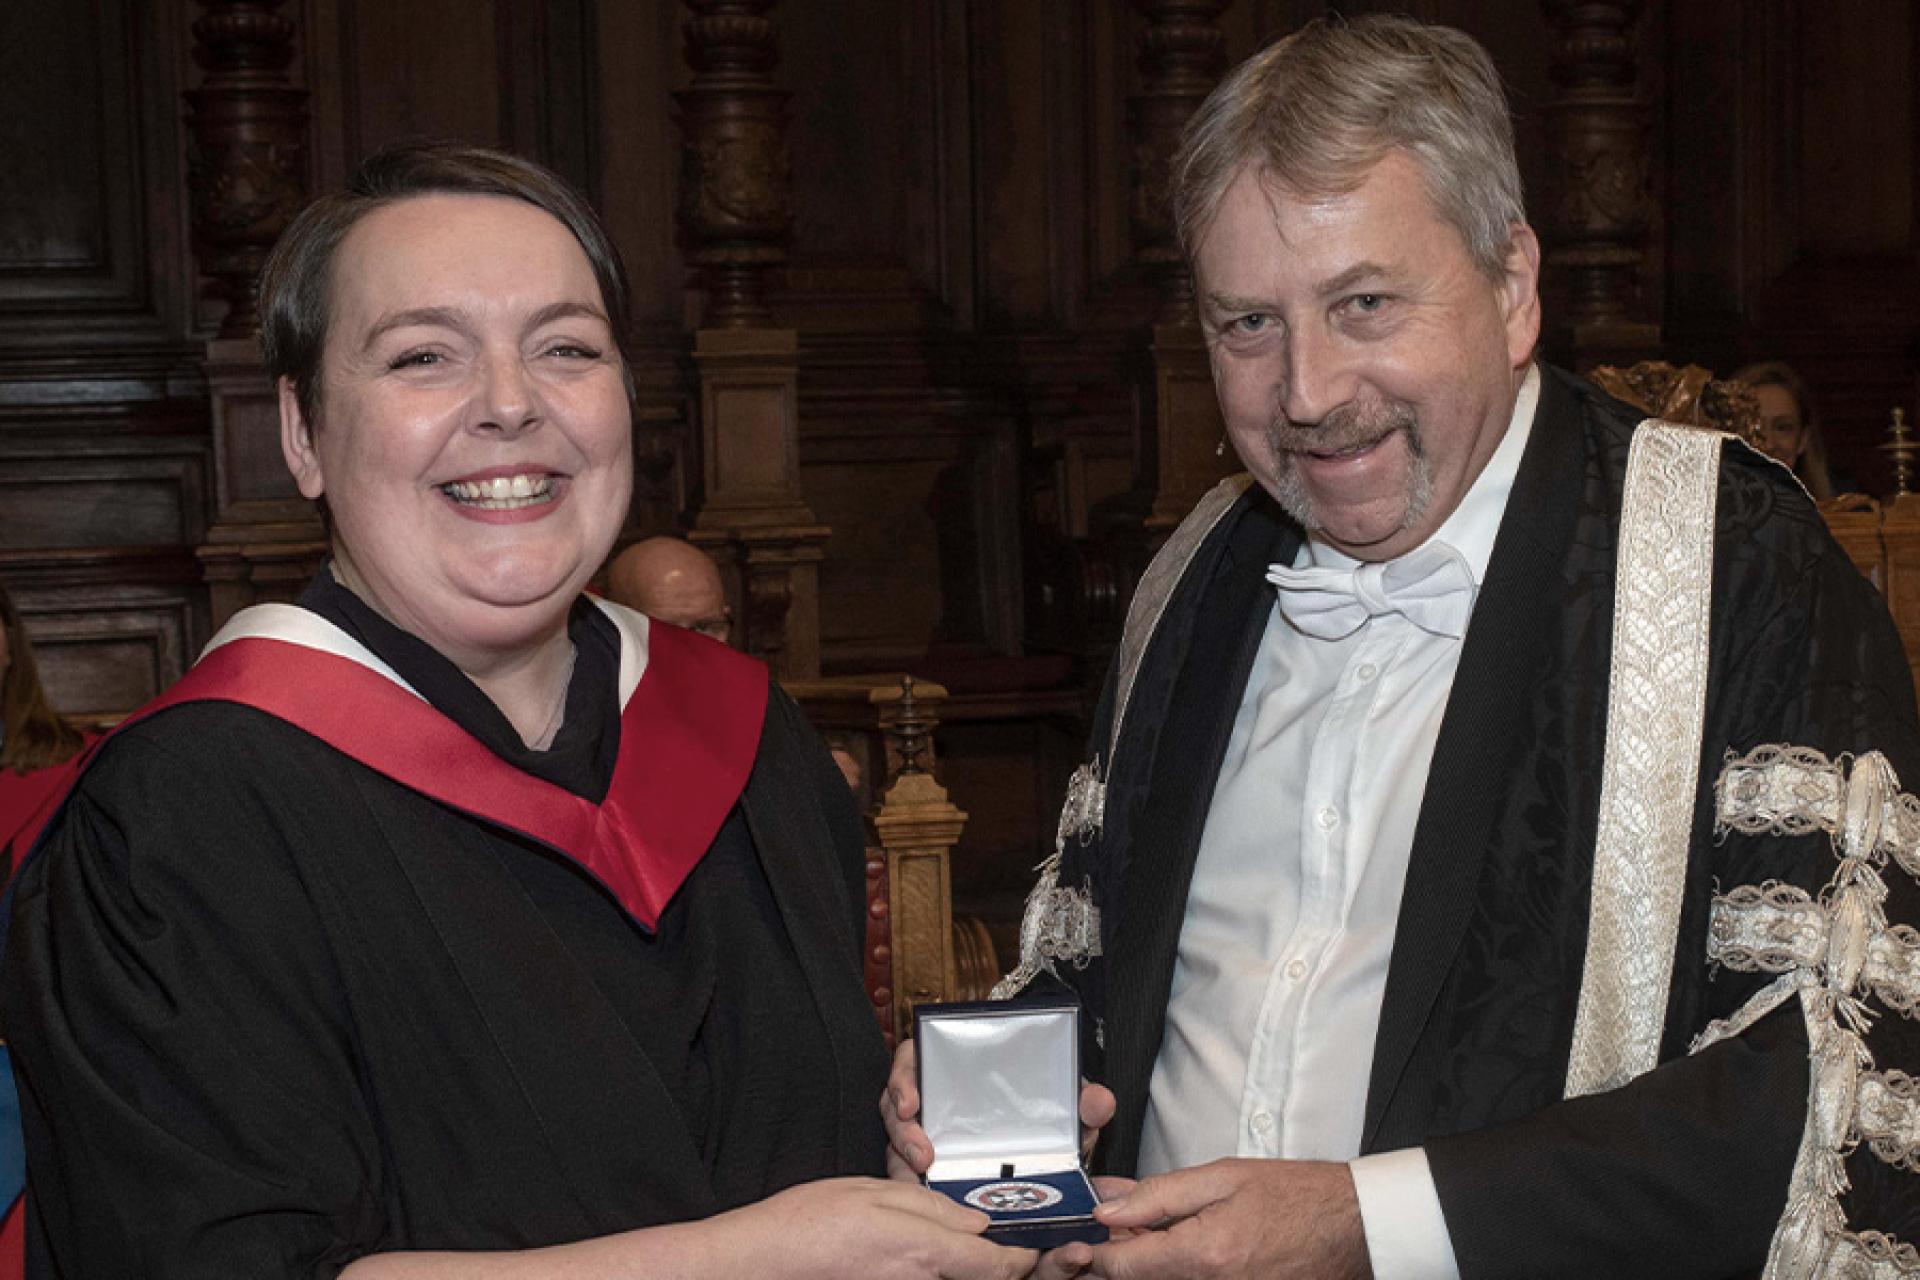 Edinburgh Law School's Lindsay Jack awarded principal’s medal